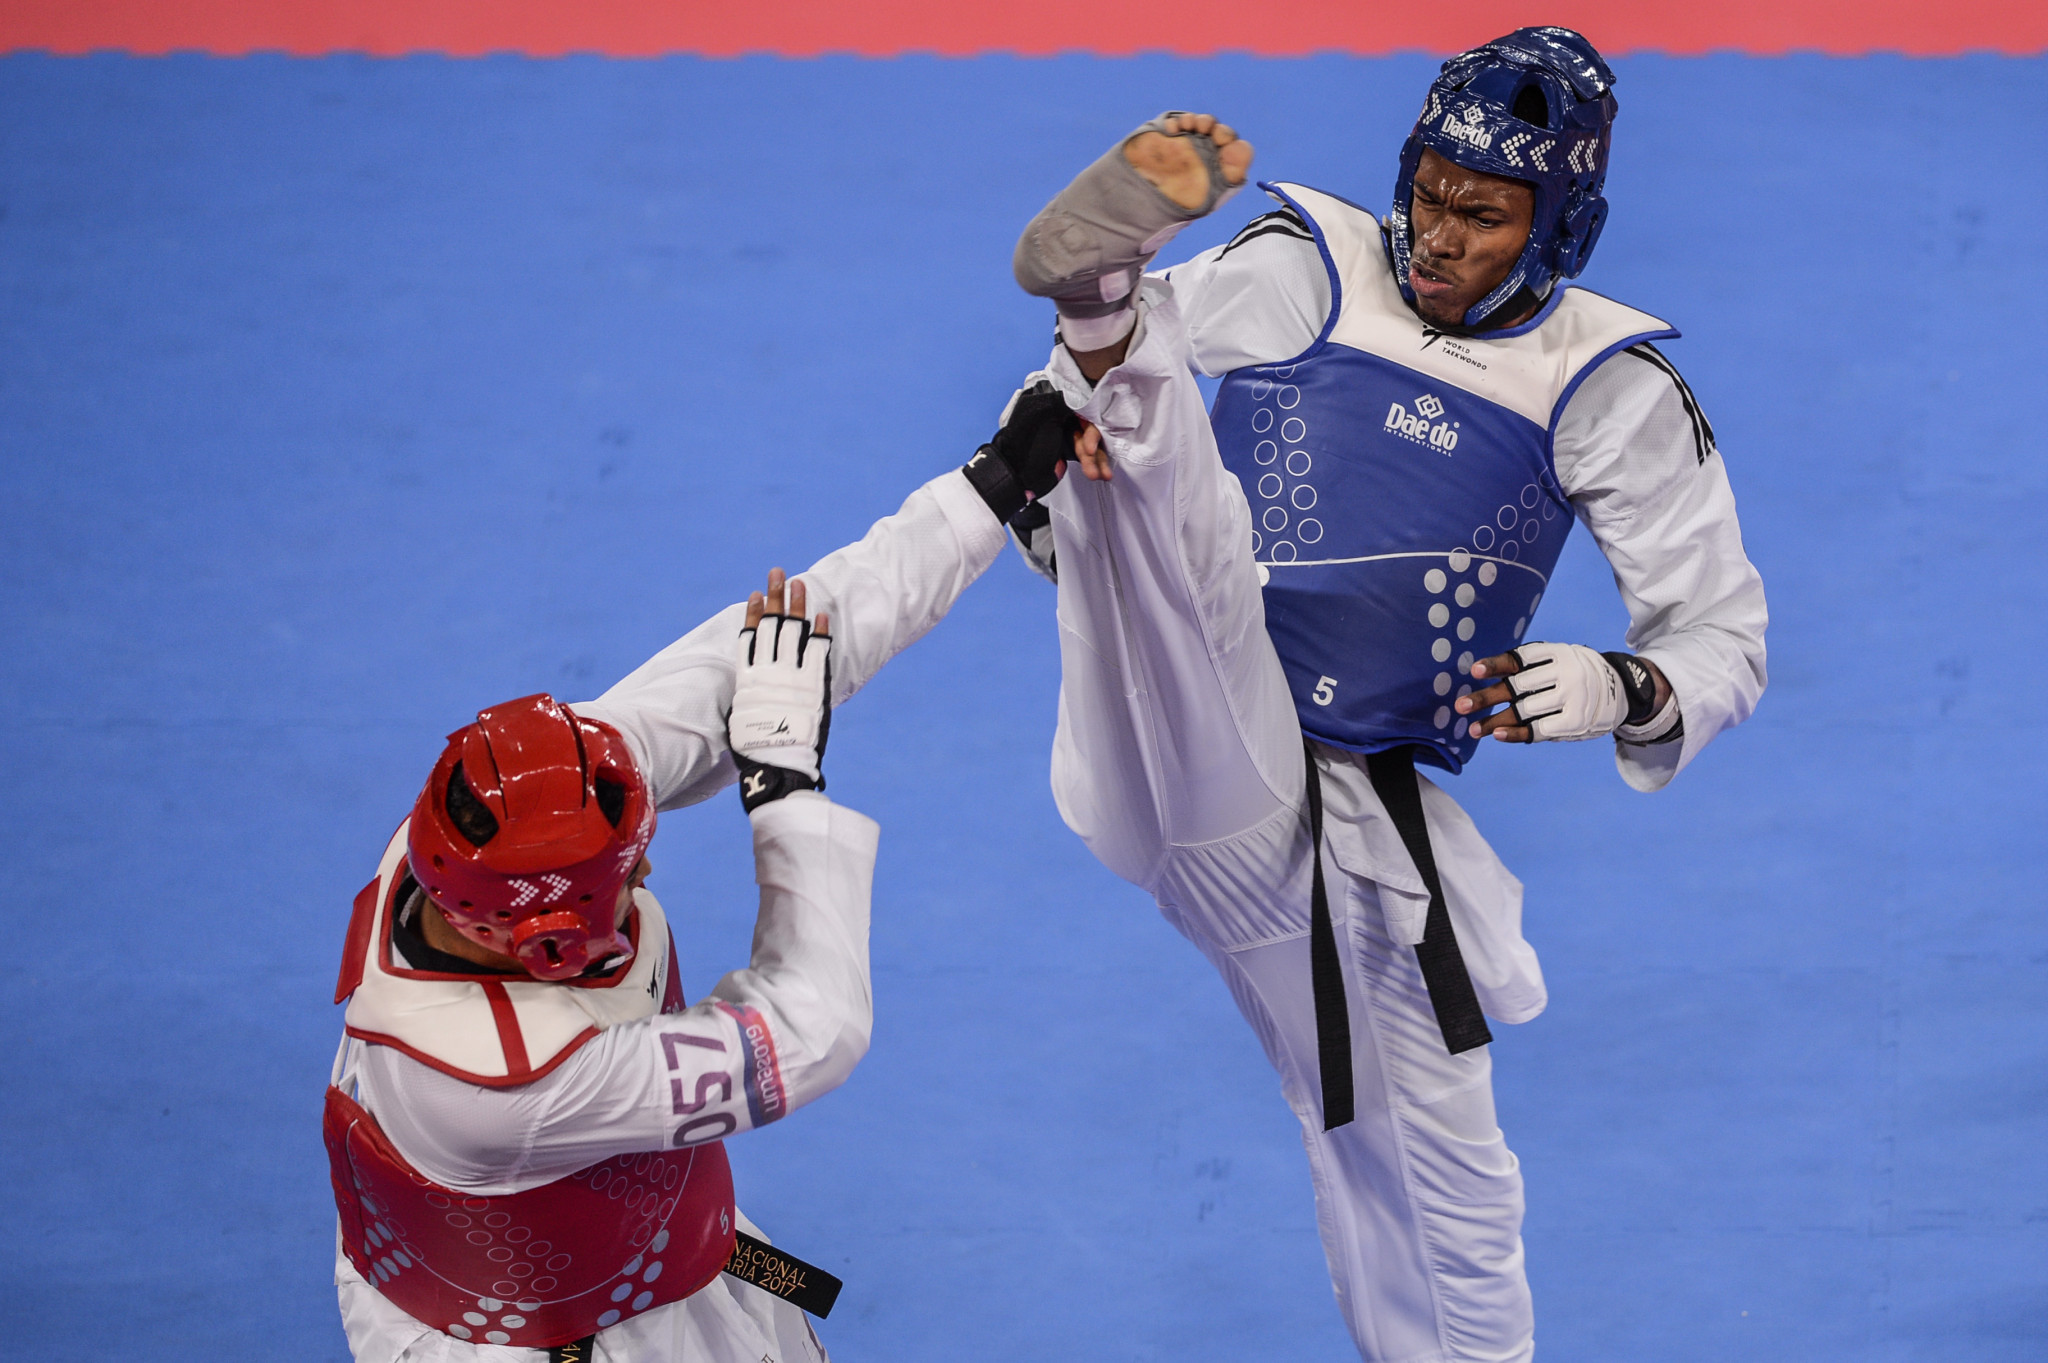 Cuba's Alba among taekwondo stars competing at Pan American Tokyo 2020 qualifier